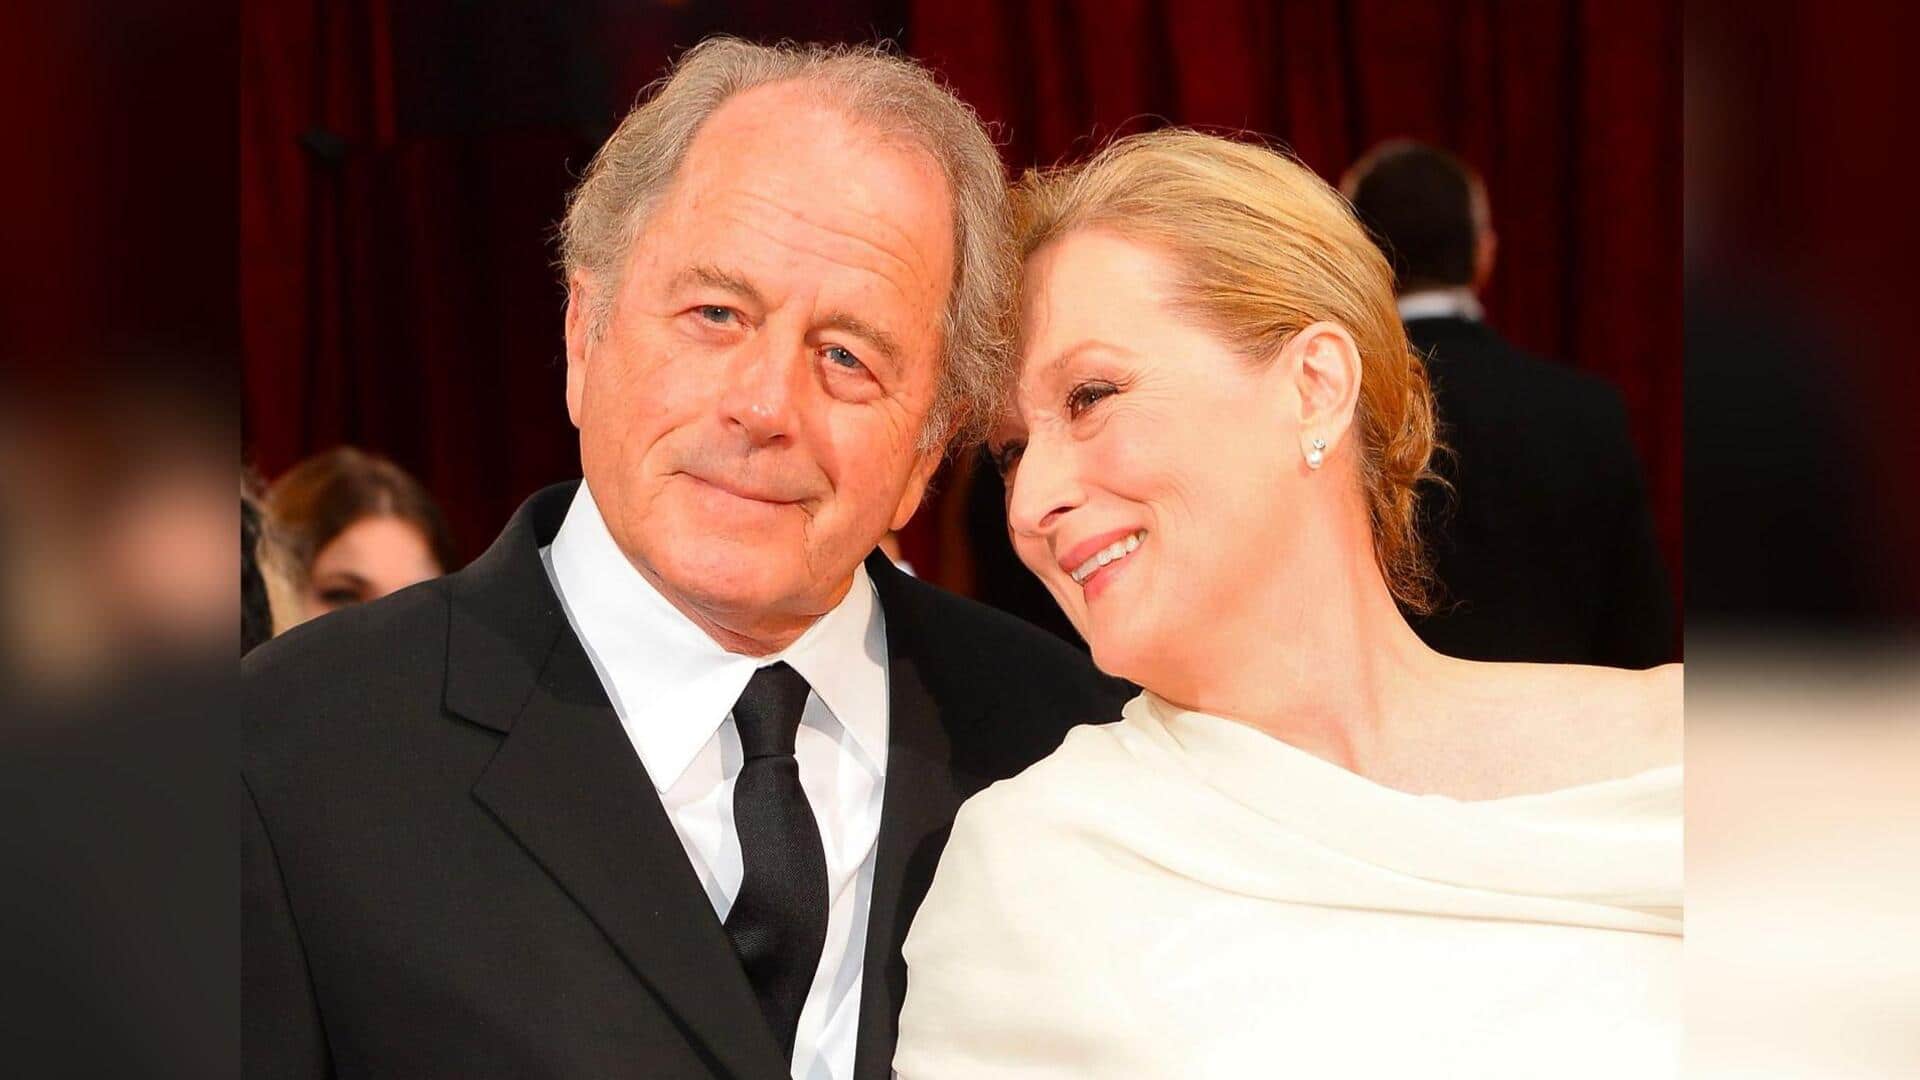 Meryl Streep, husband Don Gummer secretly separated 6yrs ago: Report